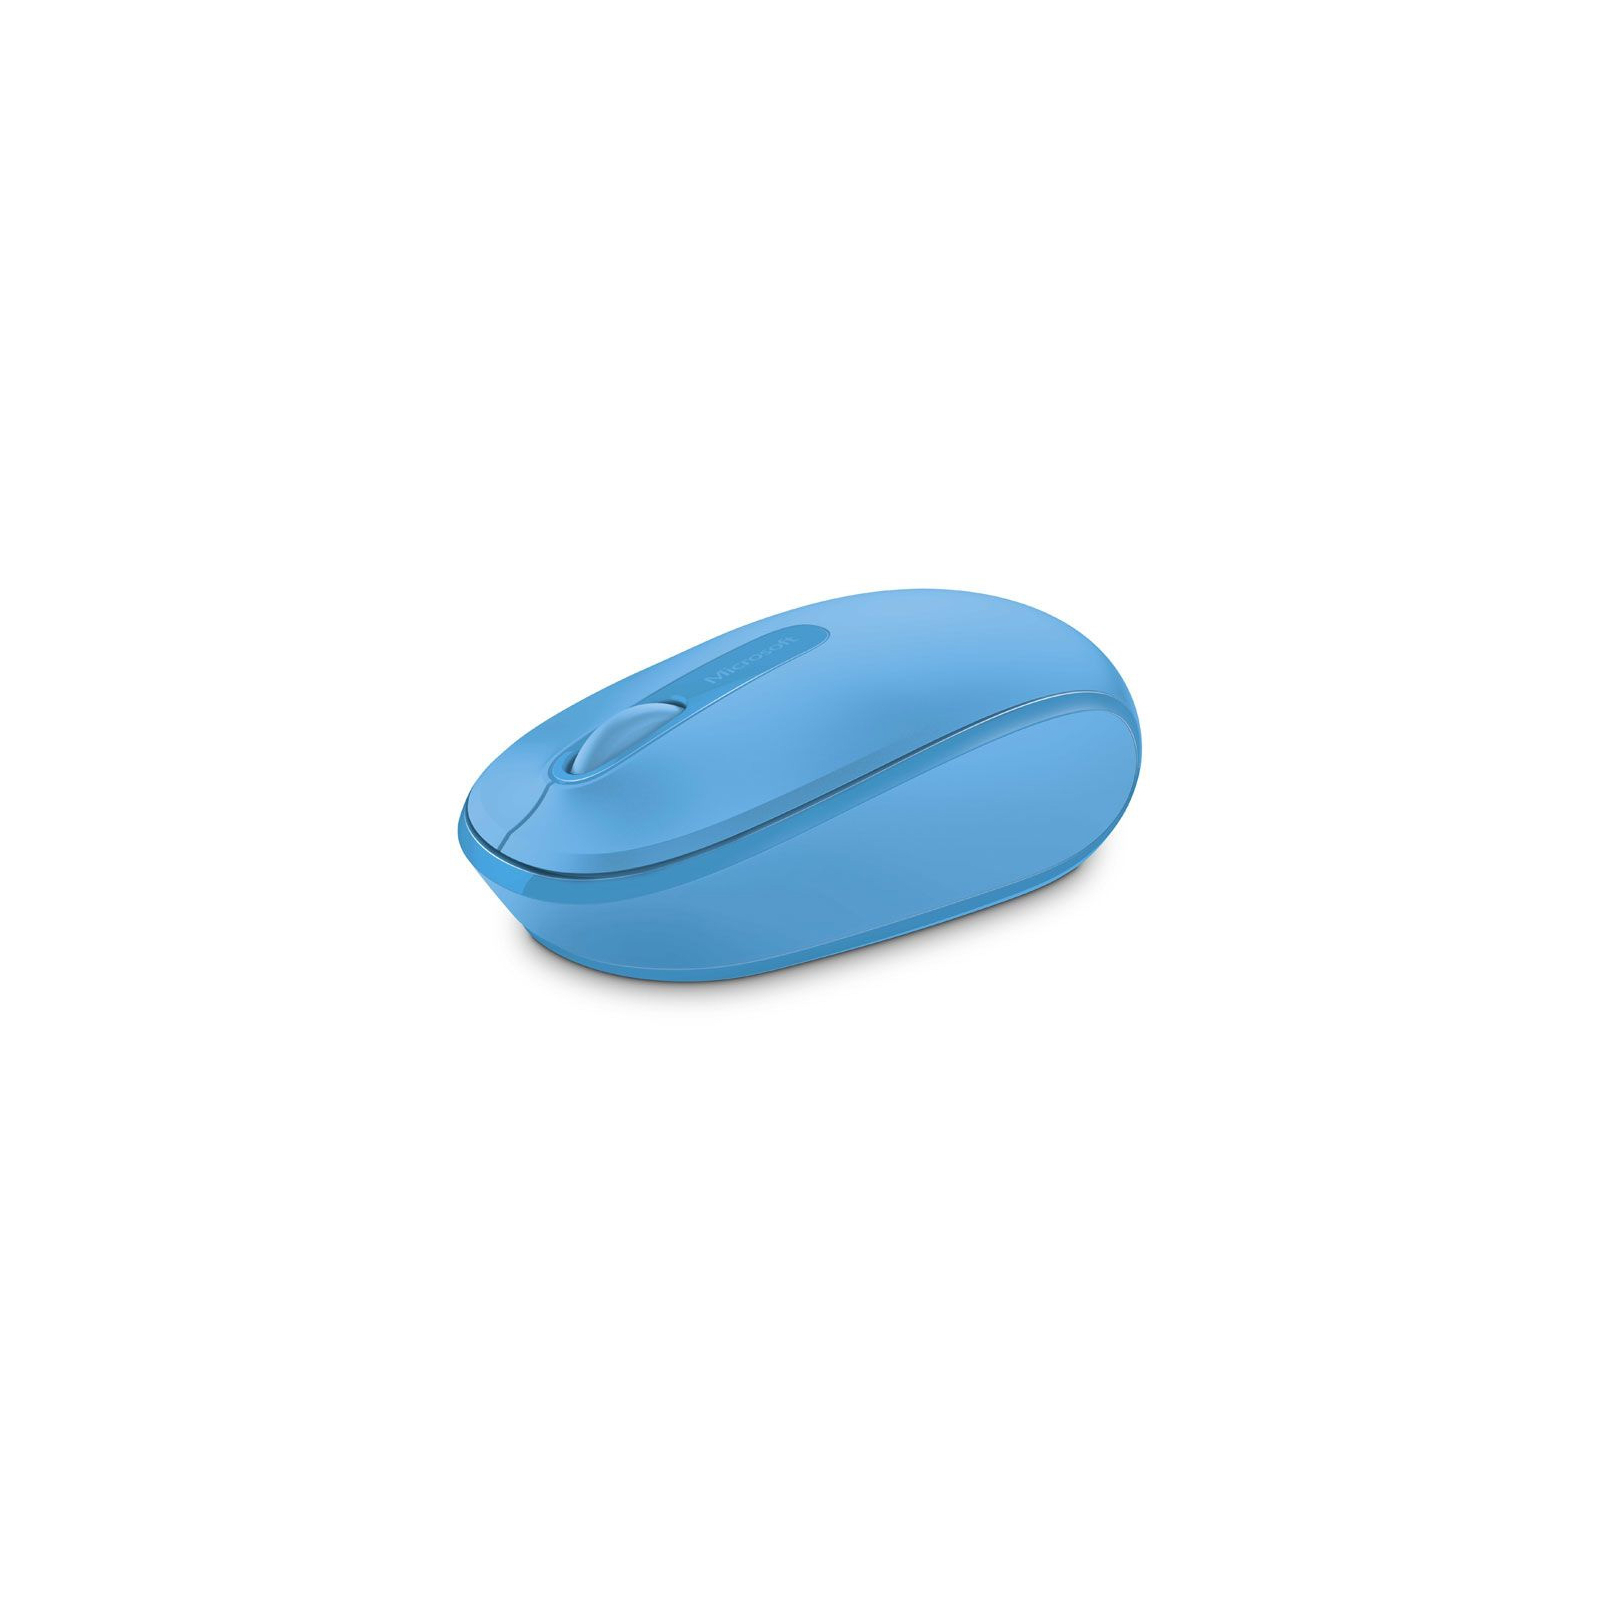 Мишка Microsoft Mobile 1850 Blu (U7Z-00058)